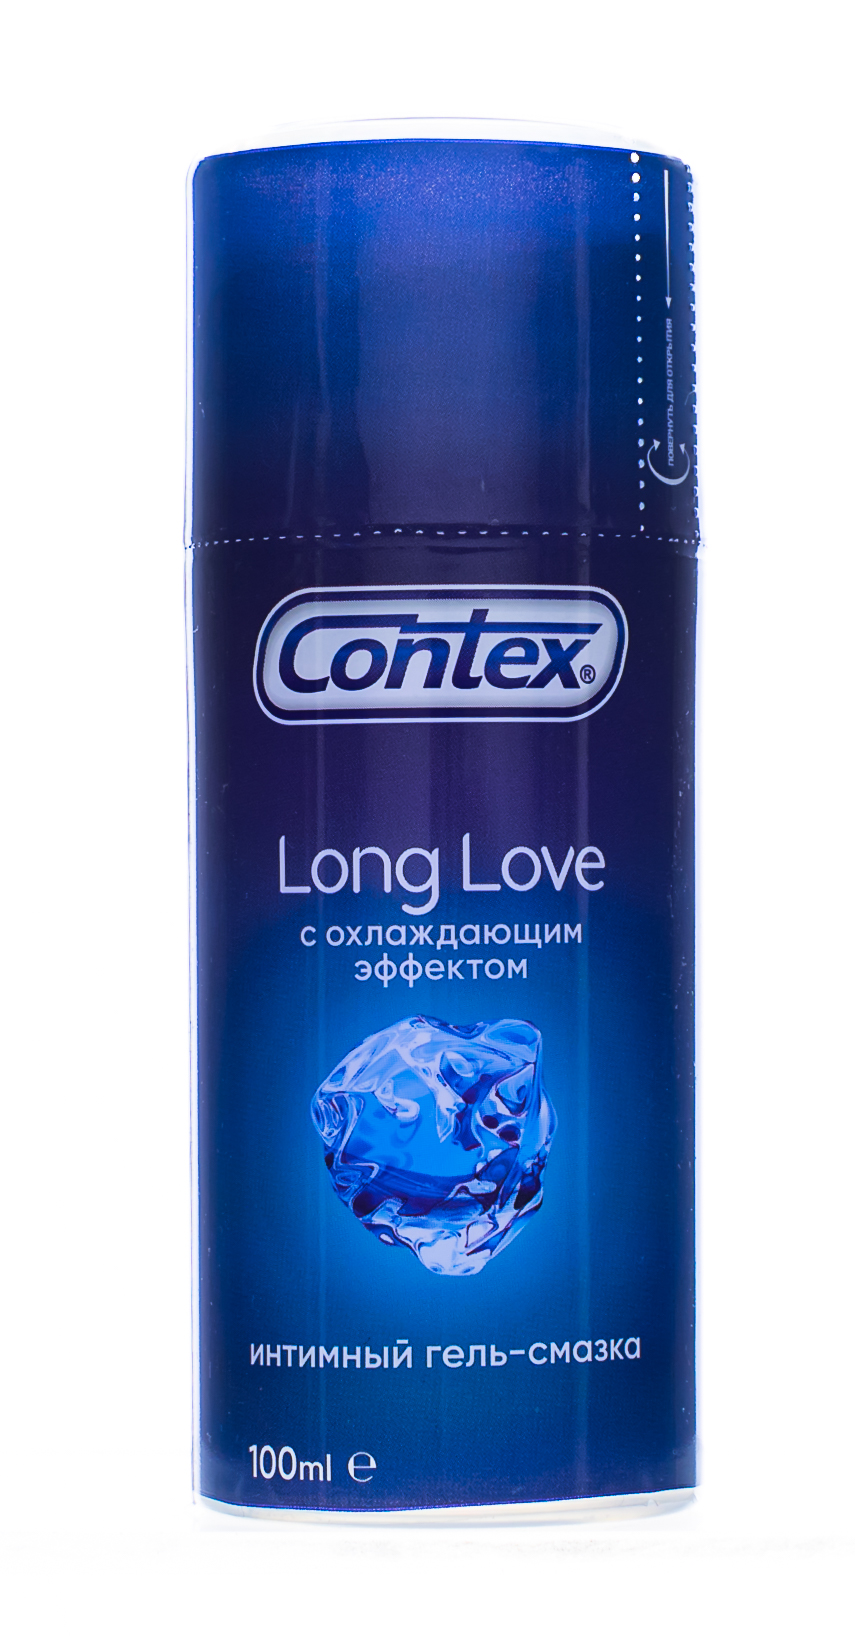 Contex Гель-смазка Long Love продлевающий акт, 100 мл (Conte